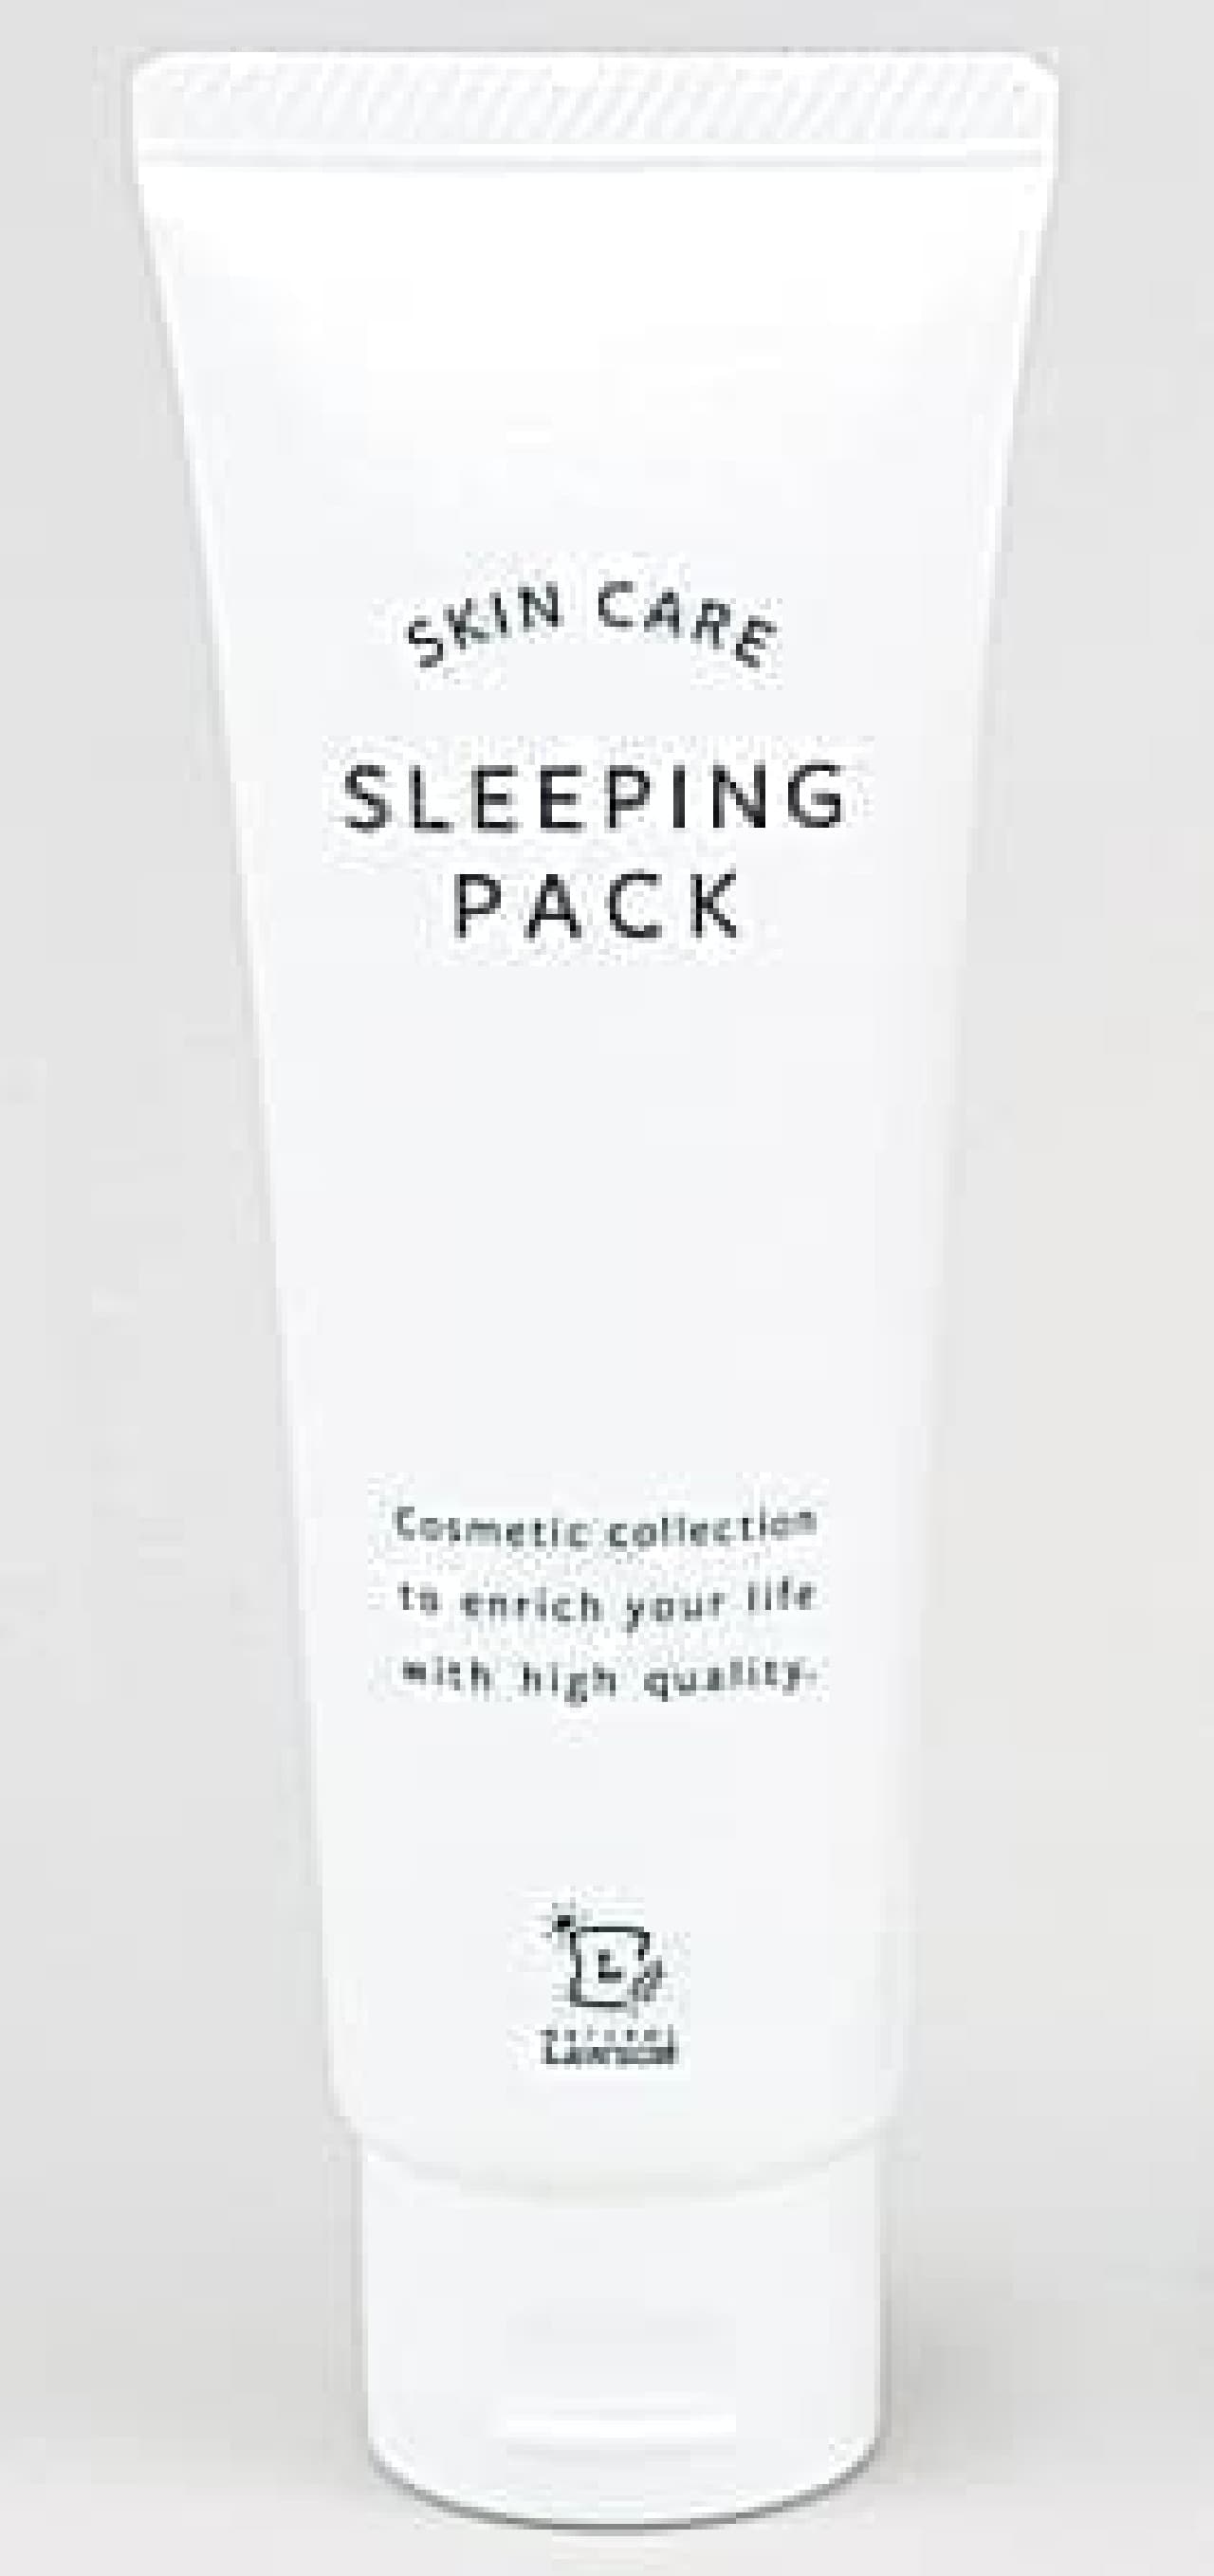 NL paint and sleep pack